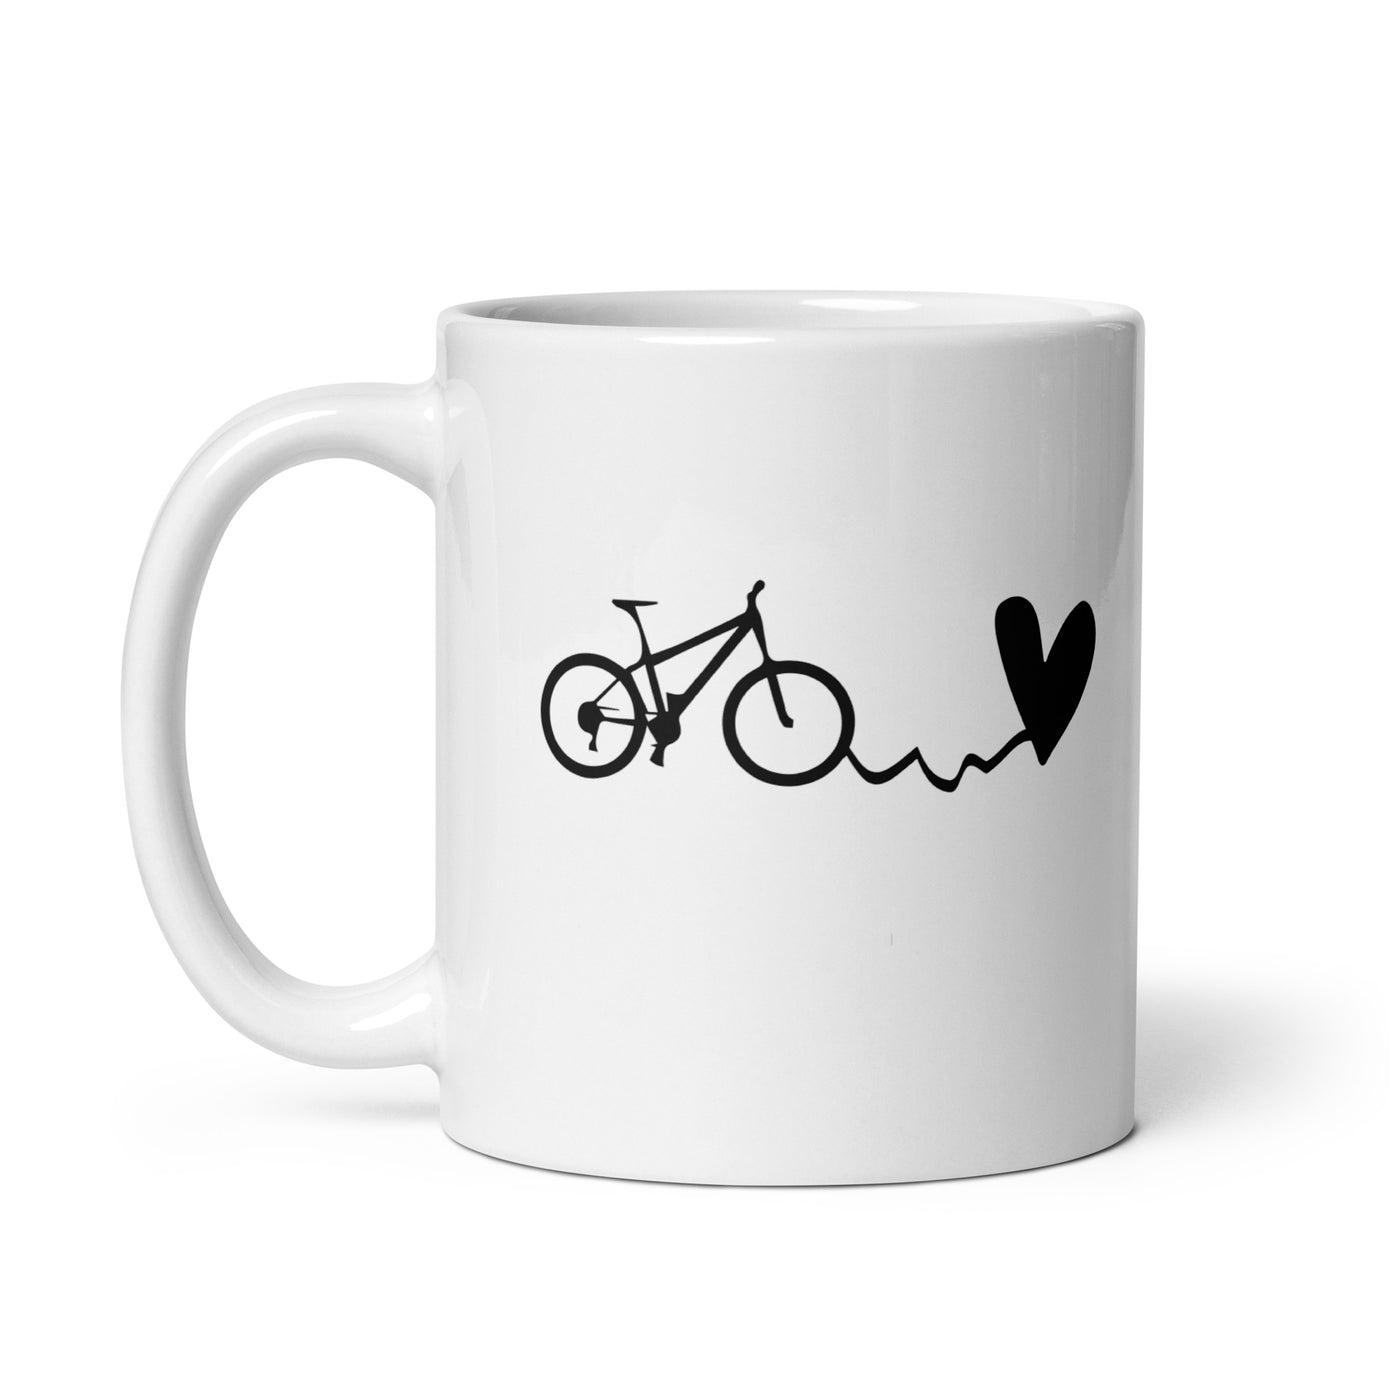 Heart - Cycling - Tasse fahrrad 11oz